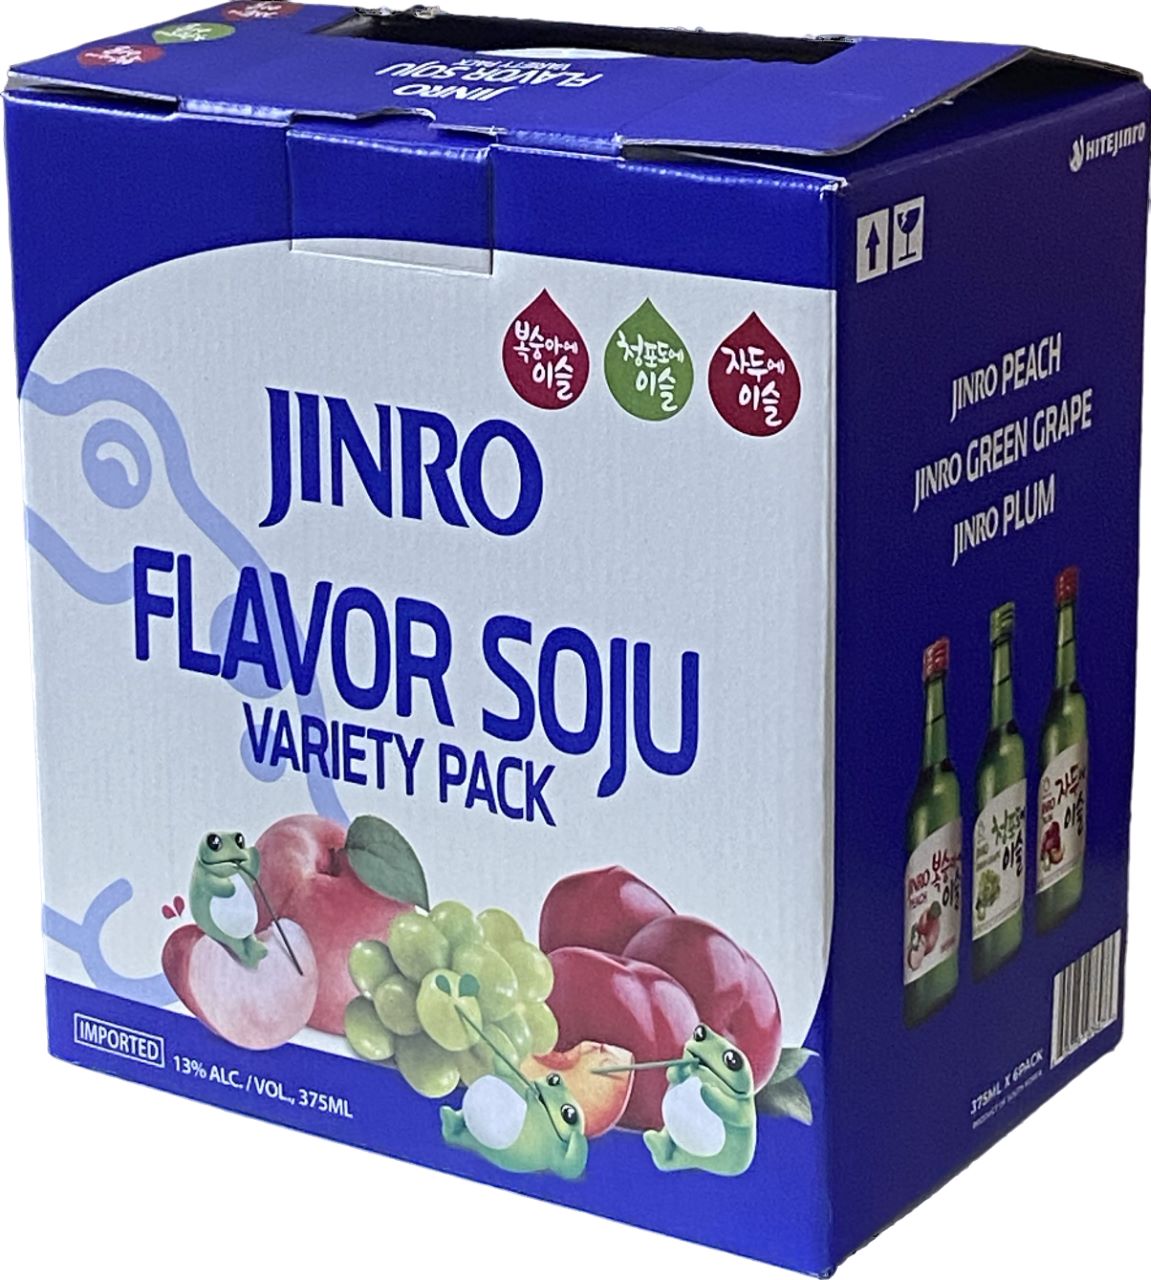 JINRO FRUIT SOJU ASSORTED -Plum, Green Grape, Peach